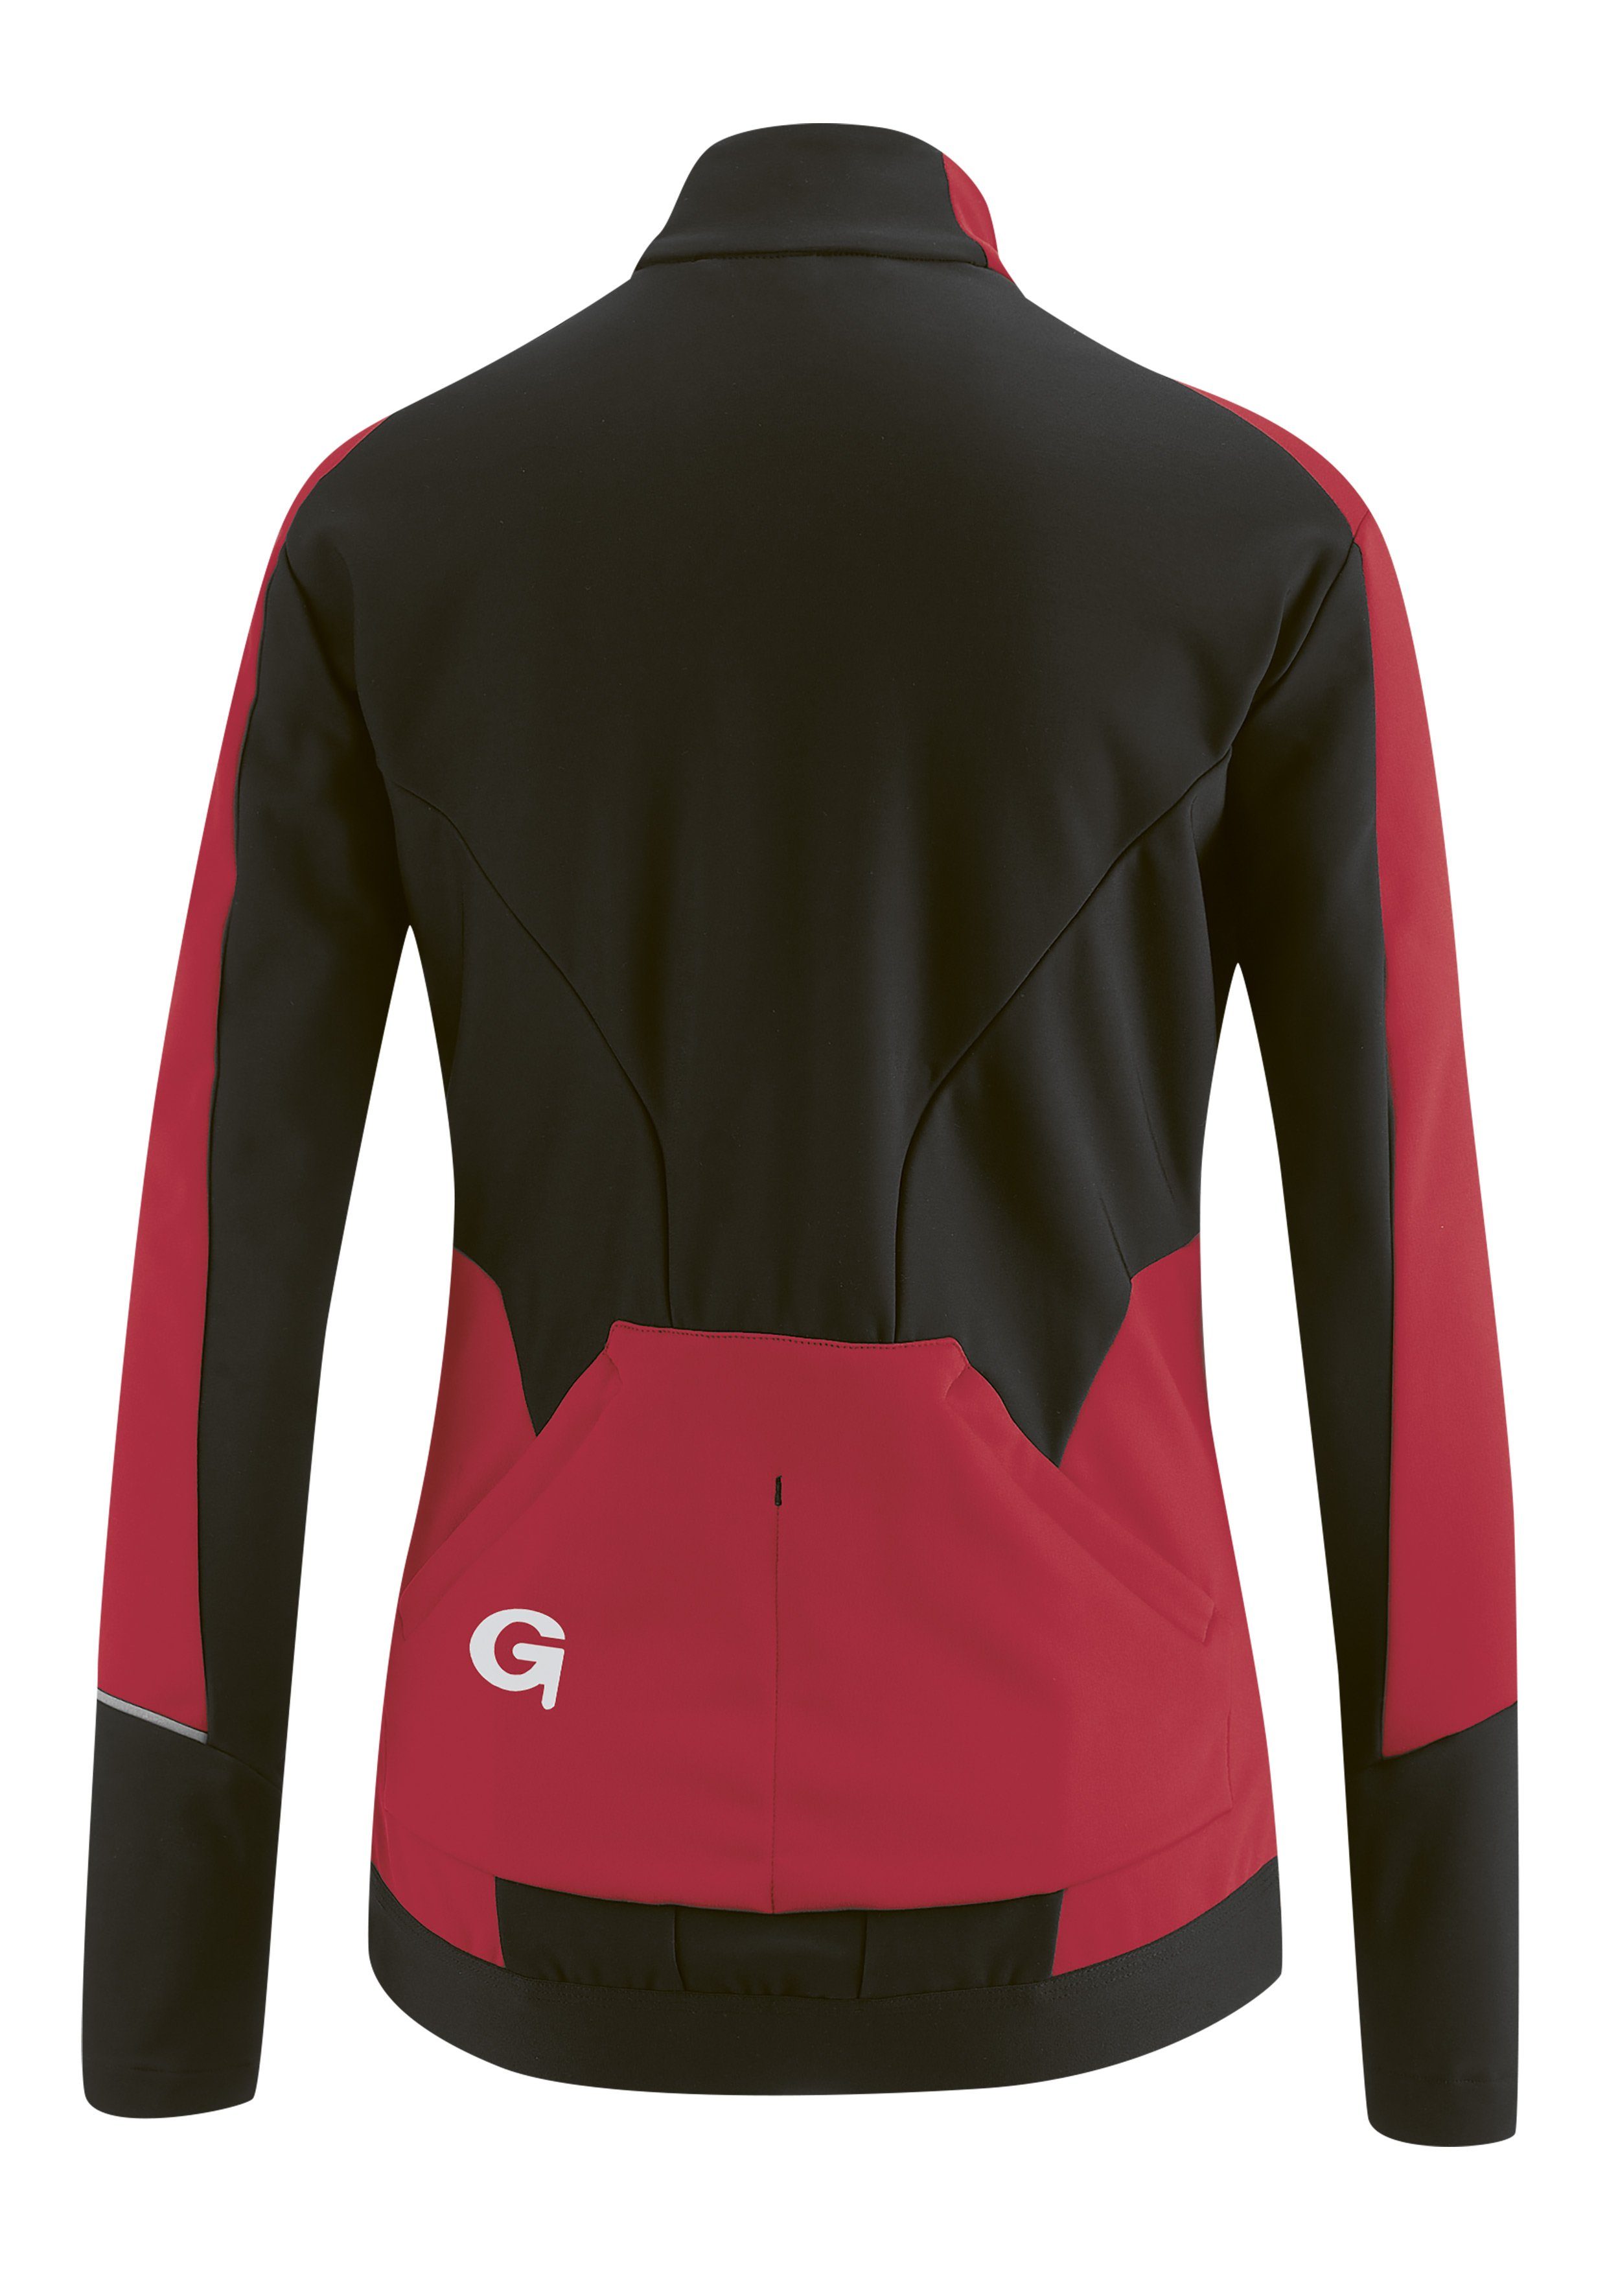 Gonso Fahrradjacke FURIANI wasserabweisend Softshell-Jacke, Damen und ziegelrot Windjacke atmungsaktiv